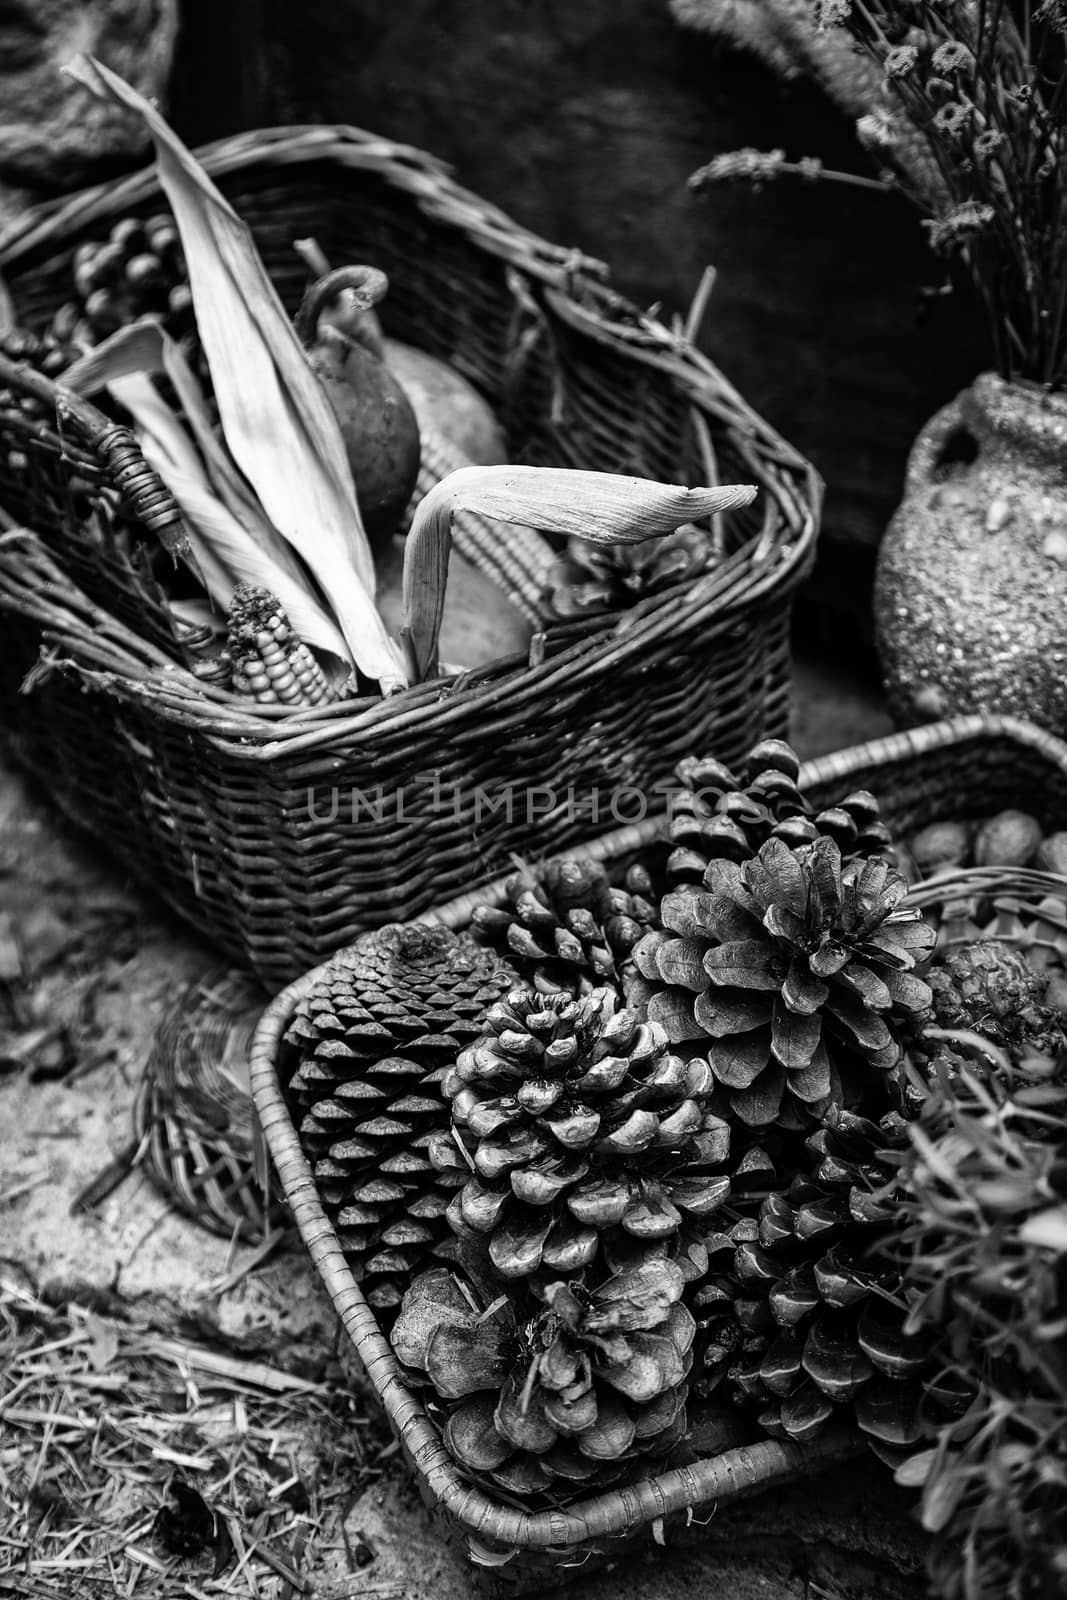 Fresh corn in wicker baskets, cereal detail